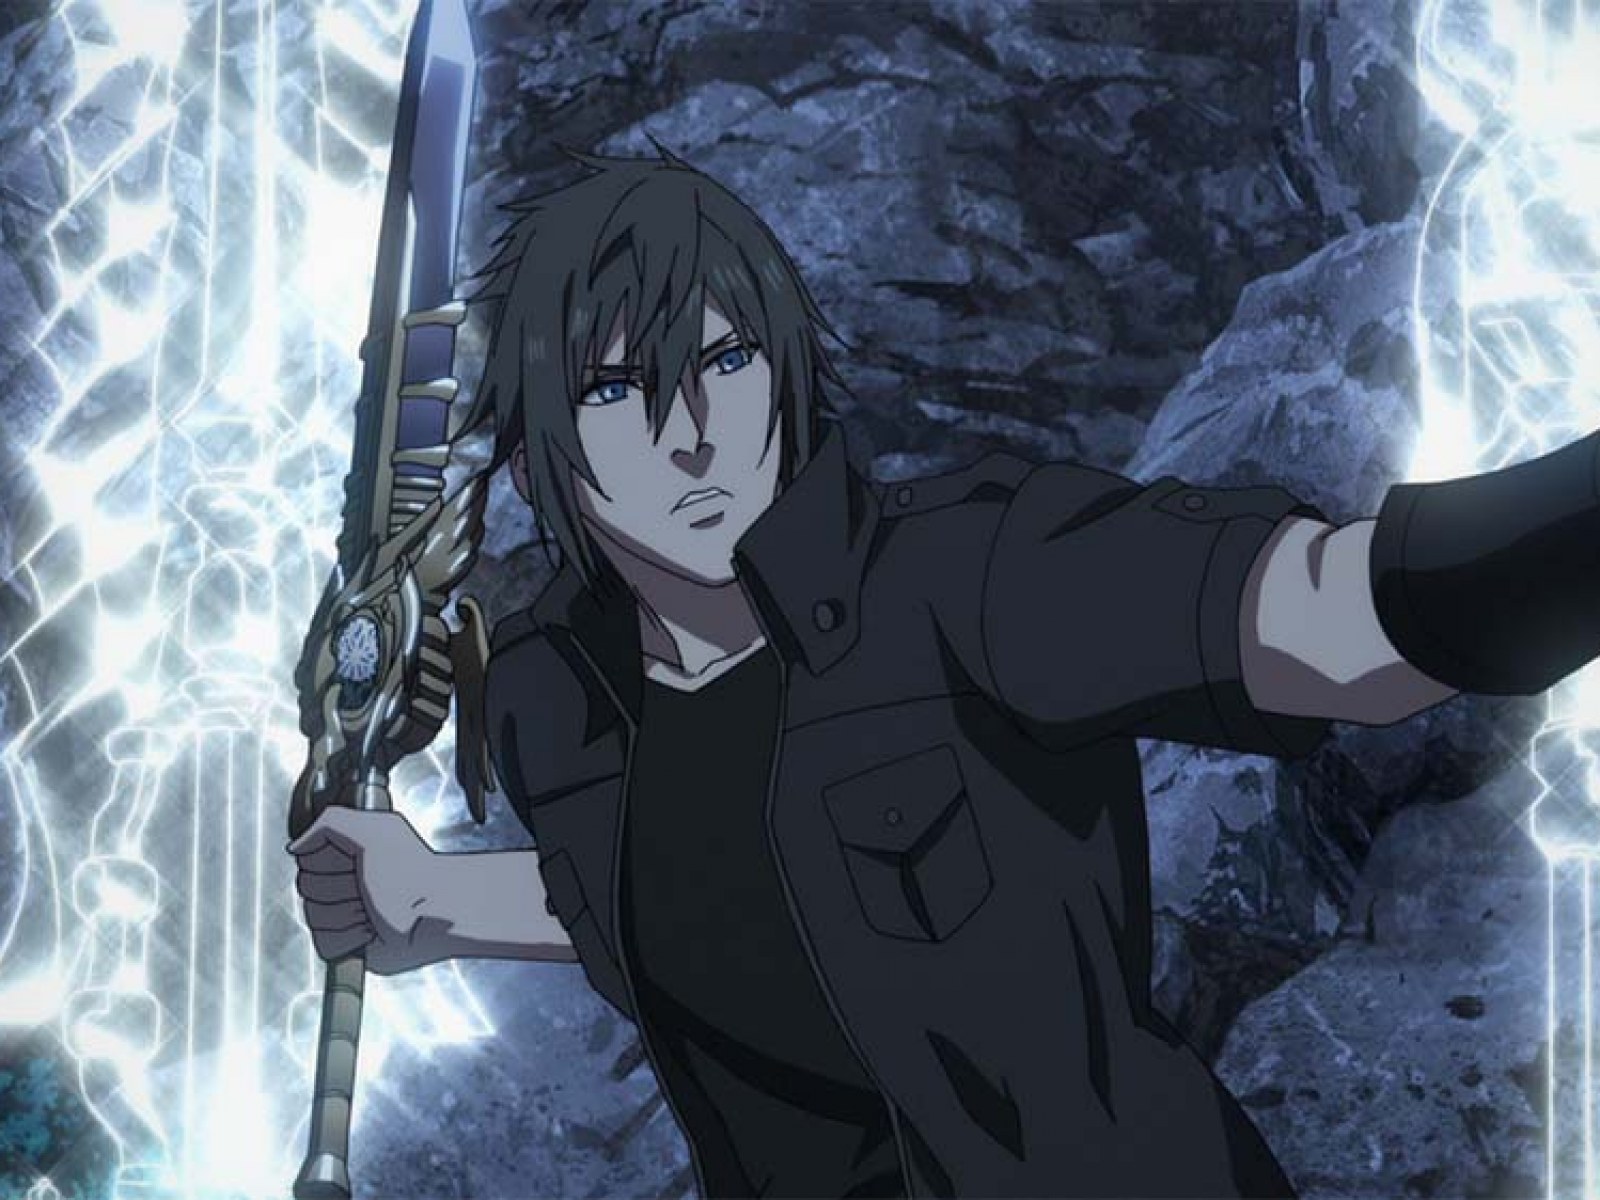 Brotherhood Final Fantasy 15: Square Enix announces anime OVA tie-in series  for